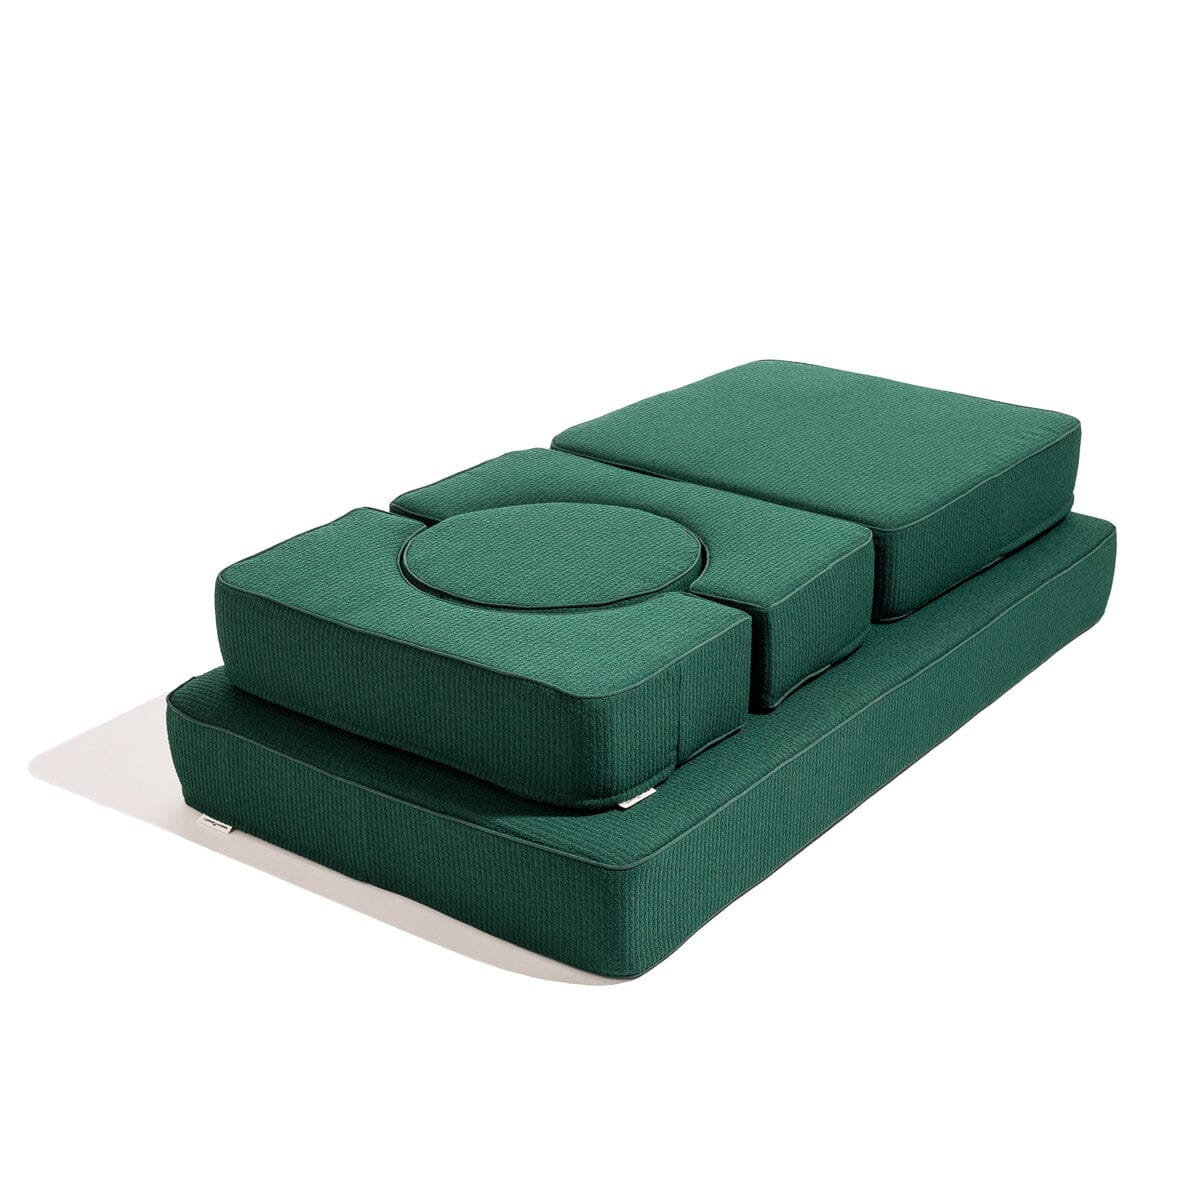 The Modular Pillow Stack - Corduroy Green Modular Pillow Stack Business & Pleasure Co 